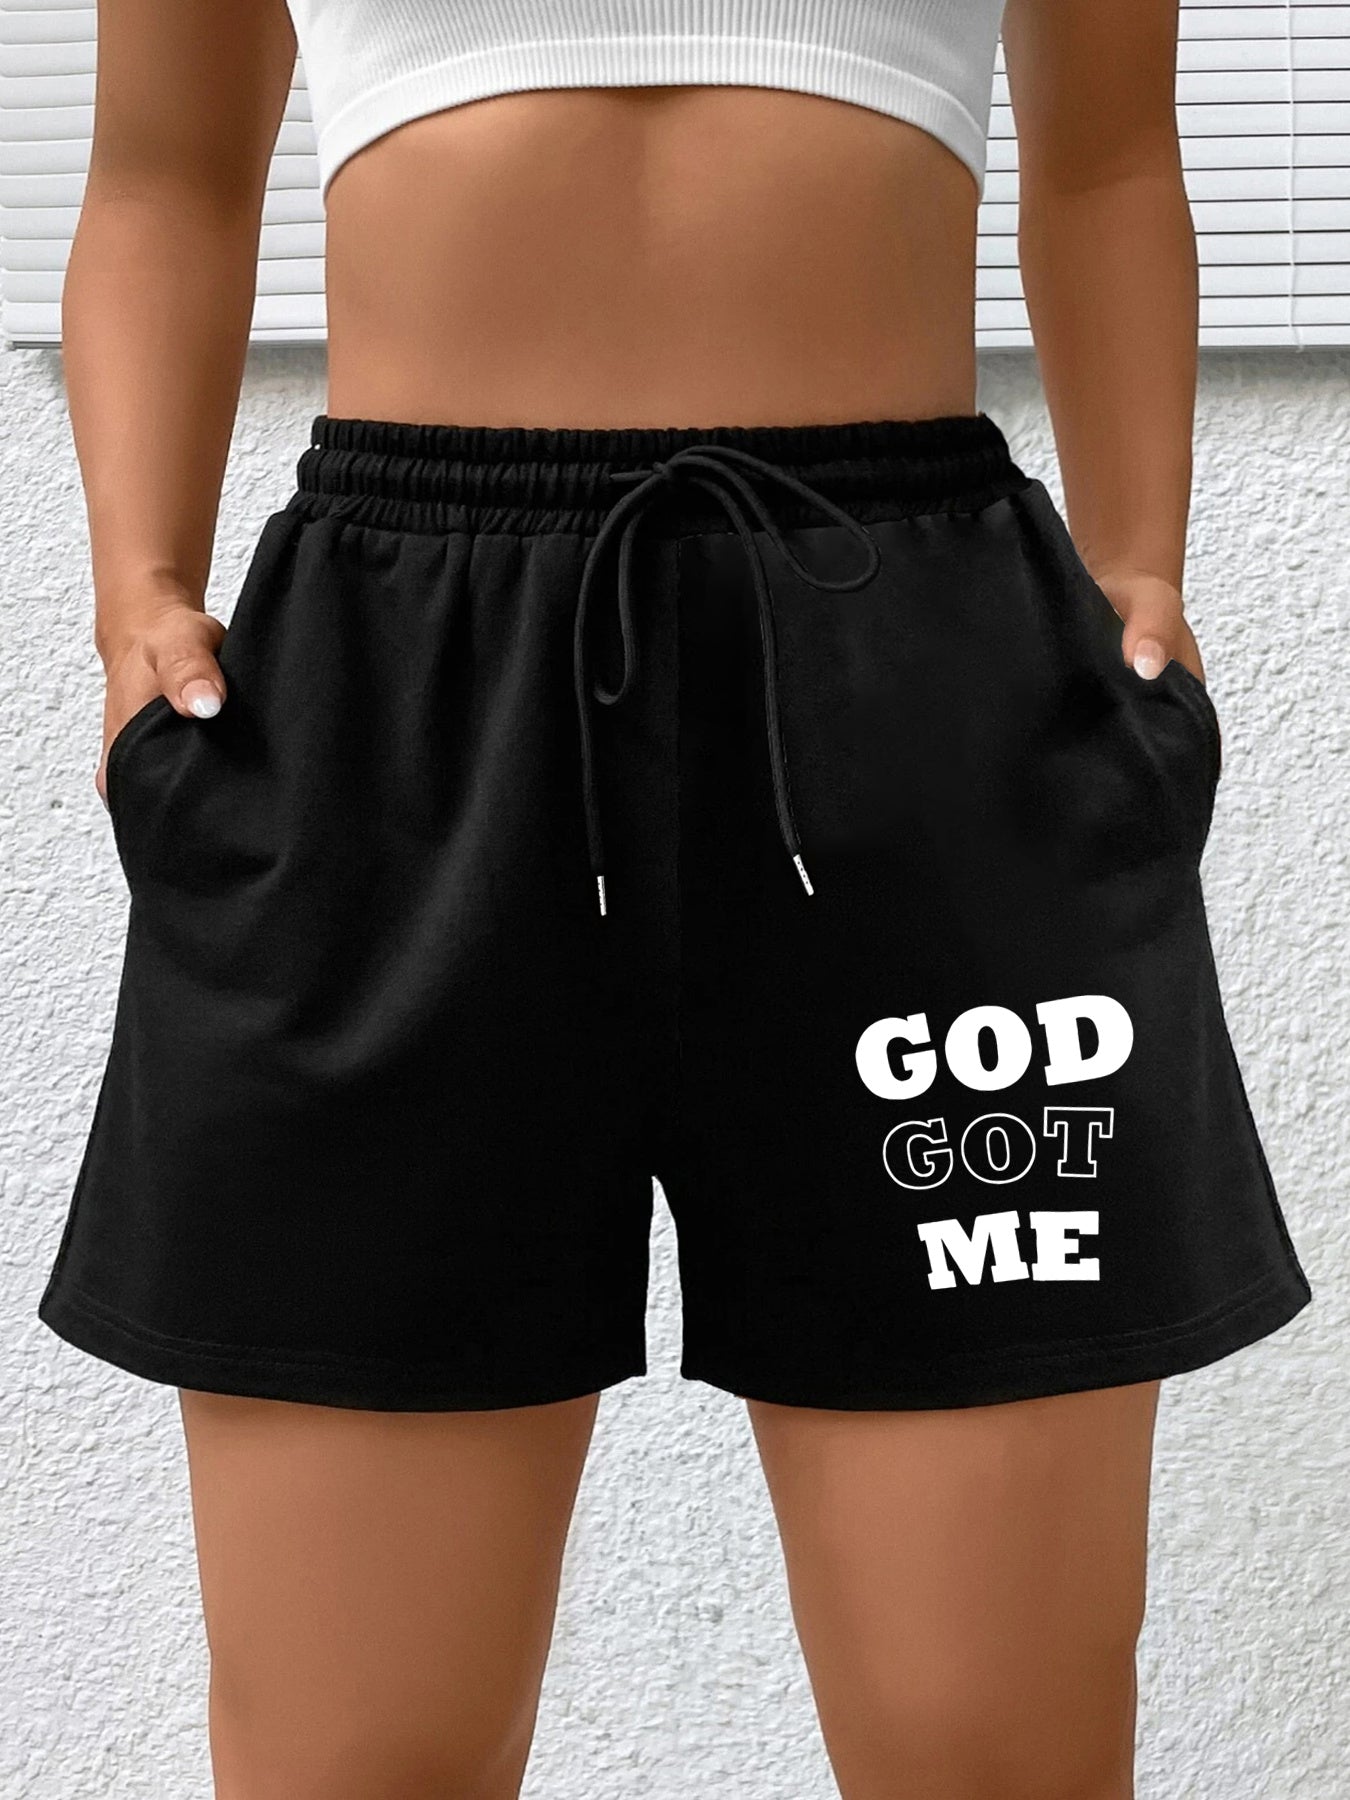 God Got Me Plus Size Women's Christian Shorts claimedbygoddesigns